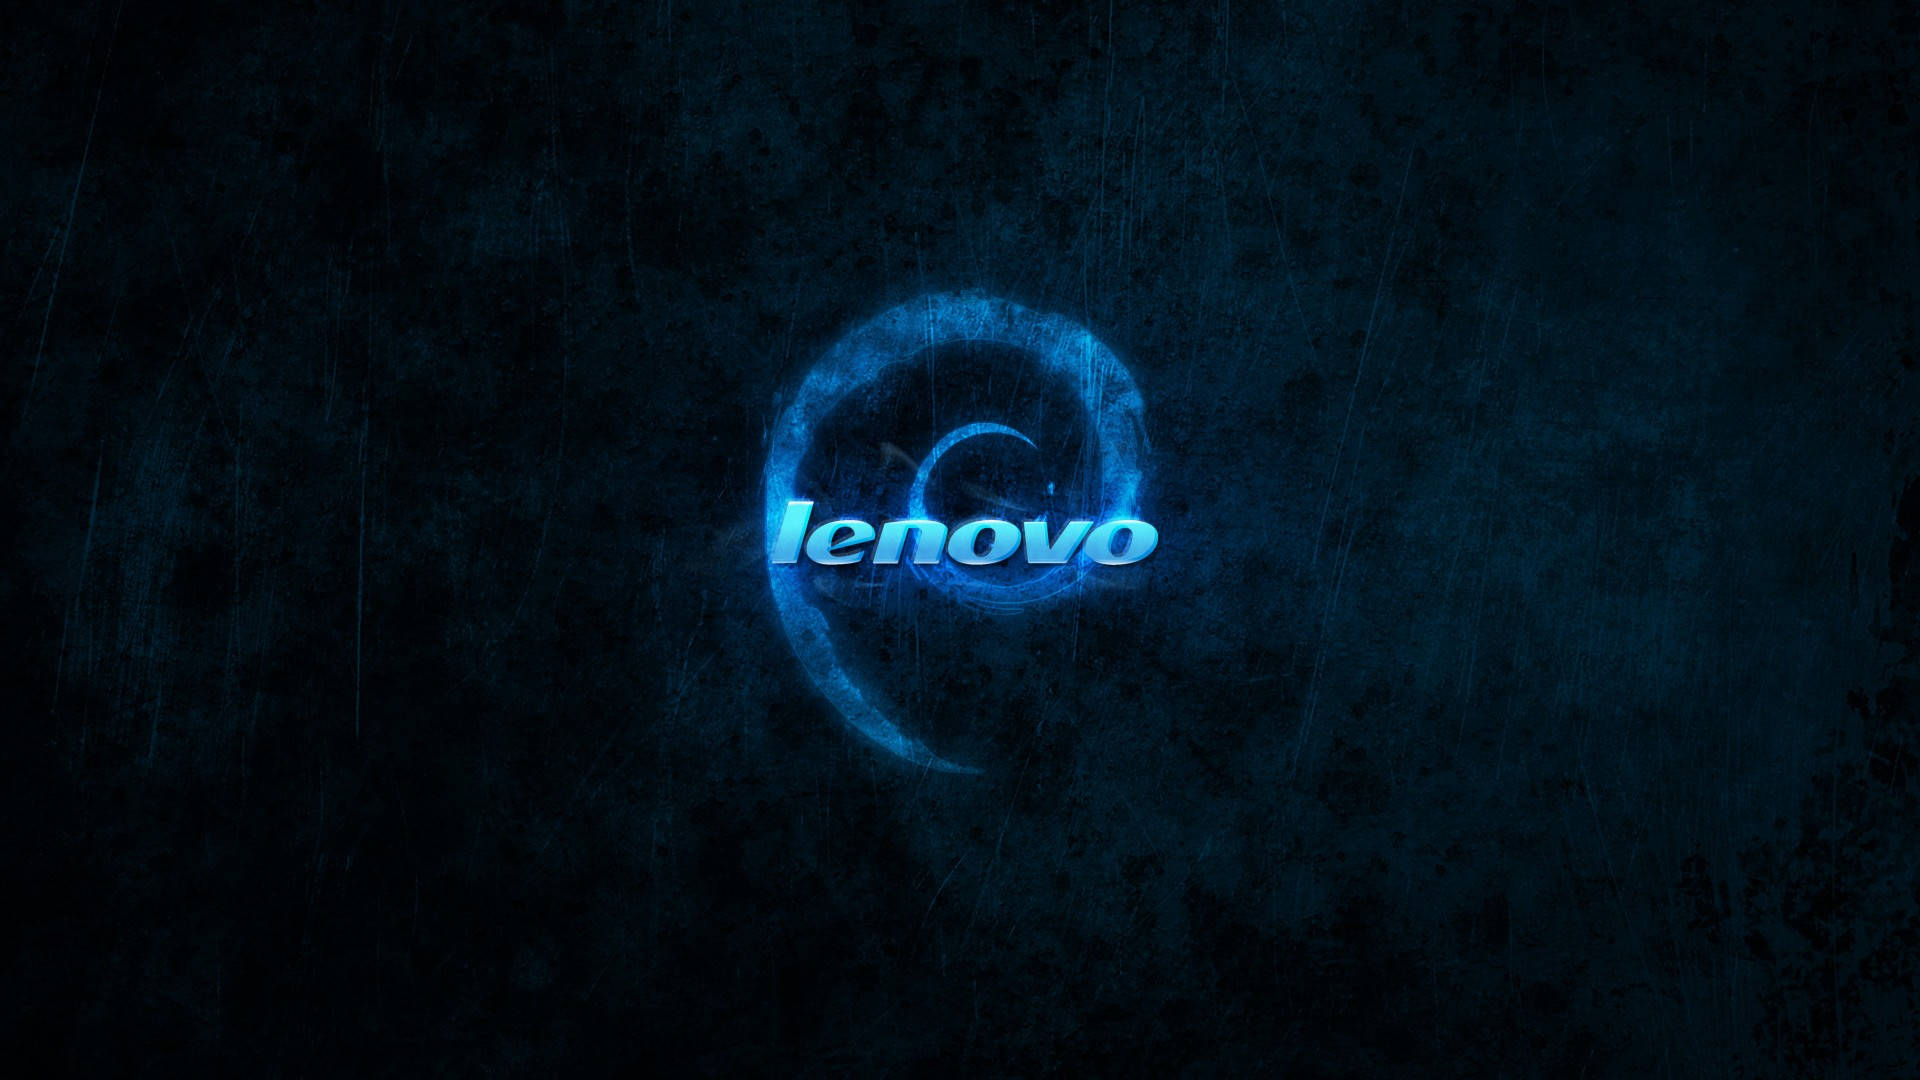 Blauewirbel Lenovo Hd Wallpaper